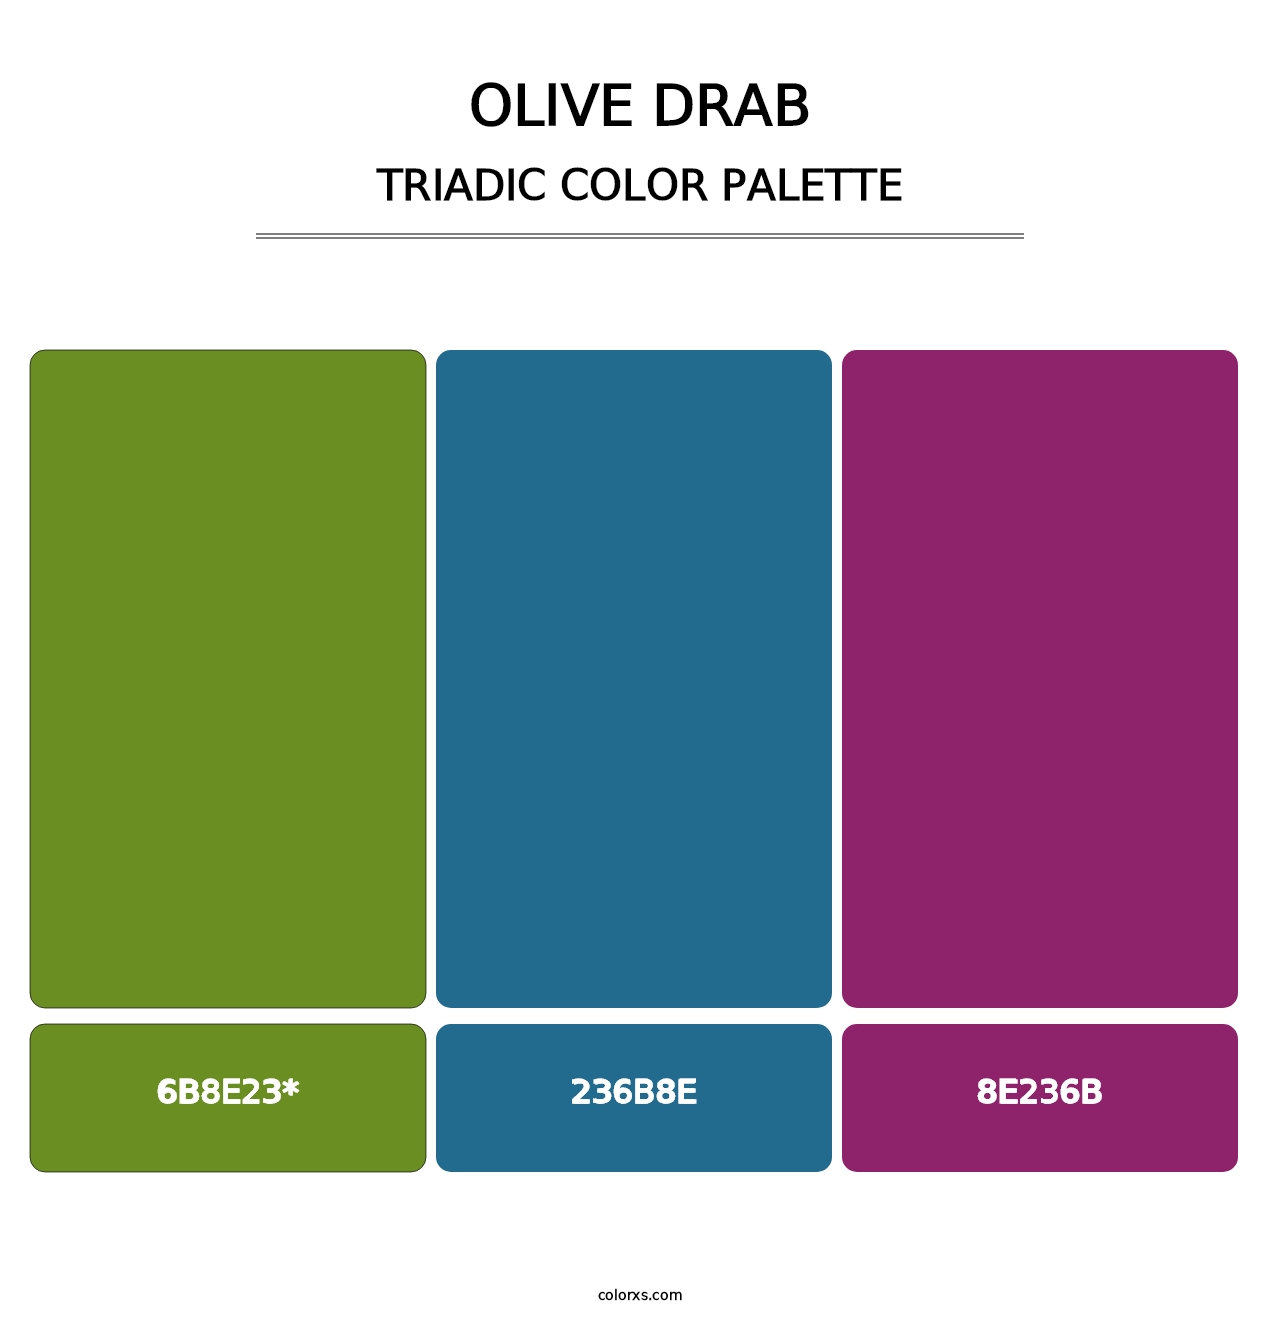 Olive Drab - Triadic Color Palette